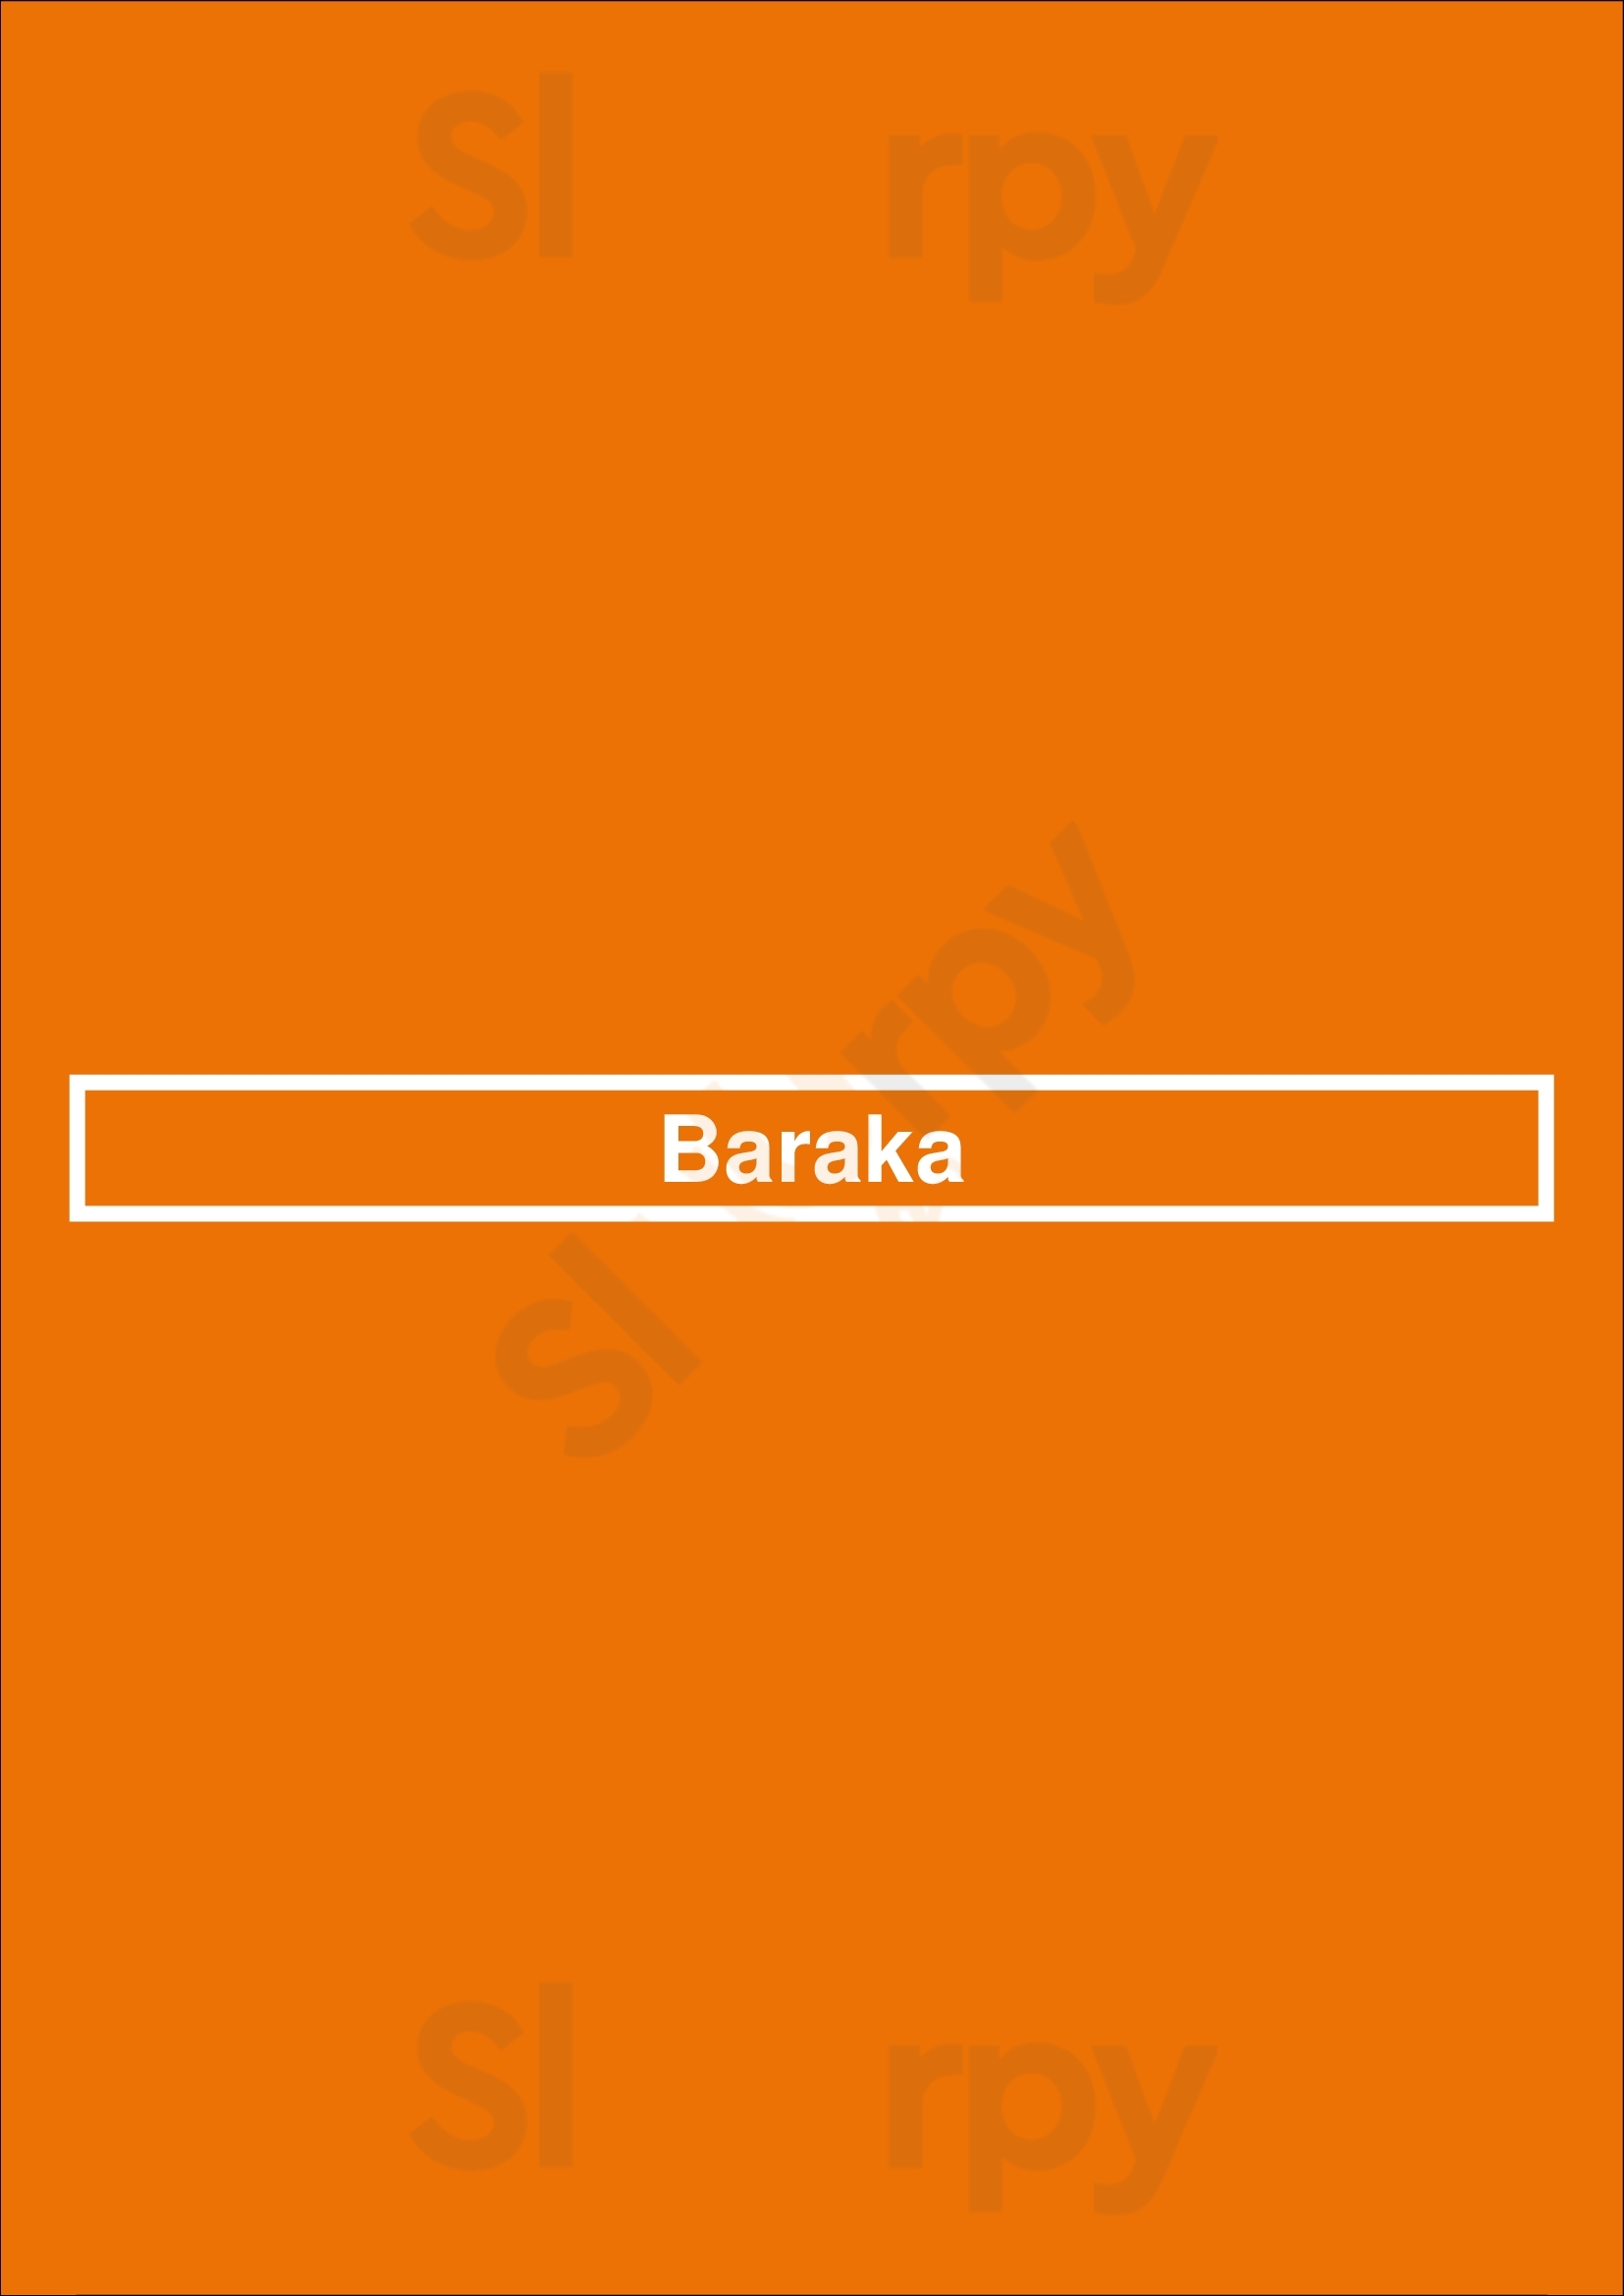 Baraka Budapest Menu - 1